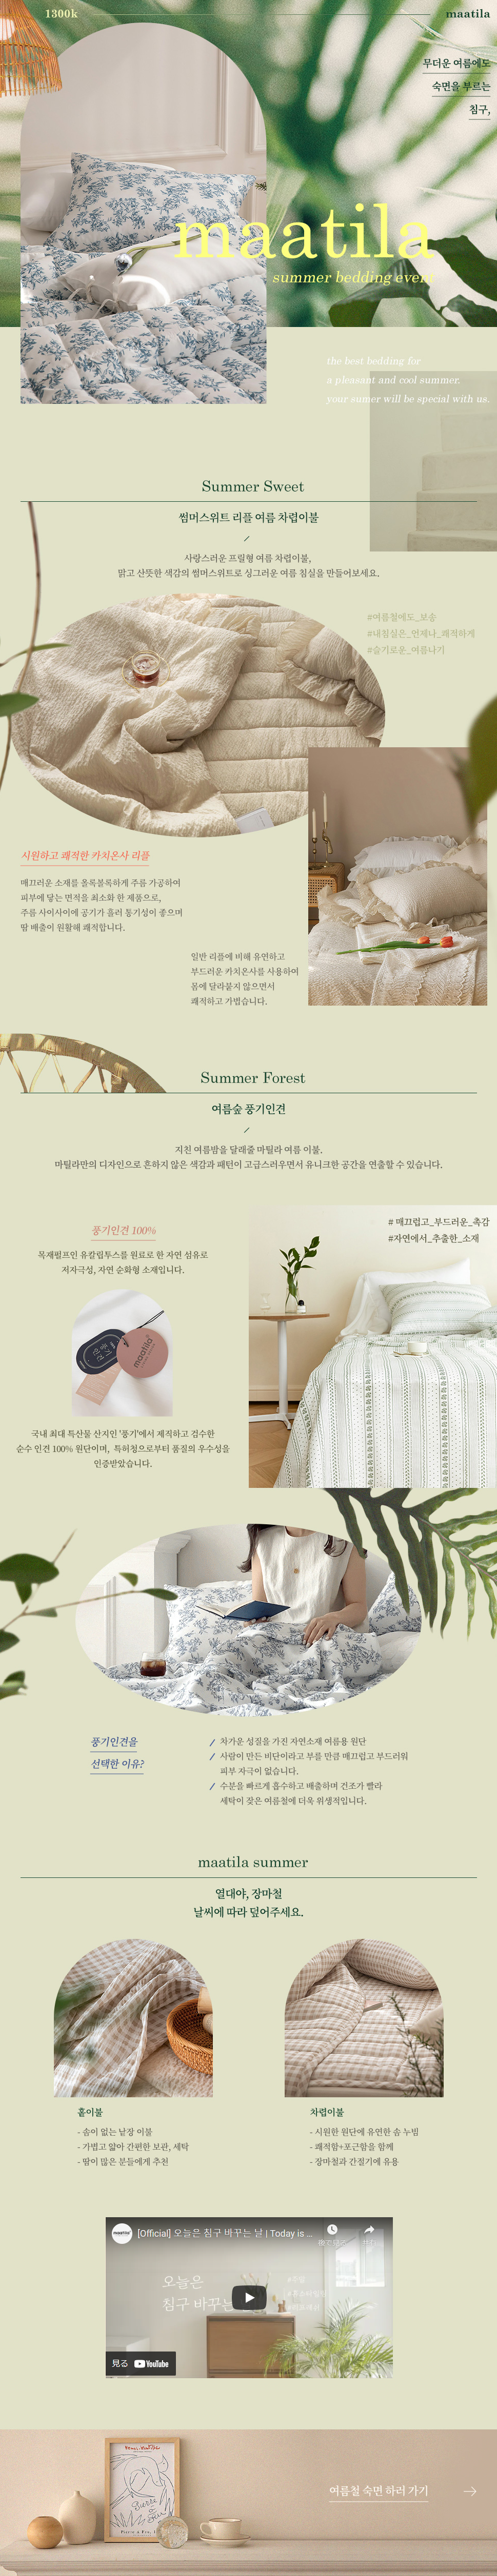 summer bedding event_pc_1